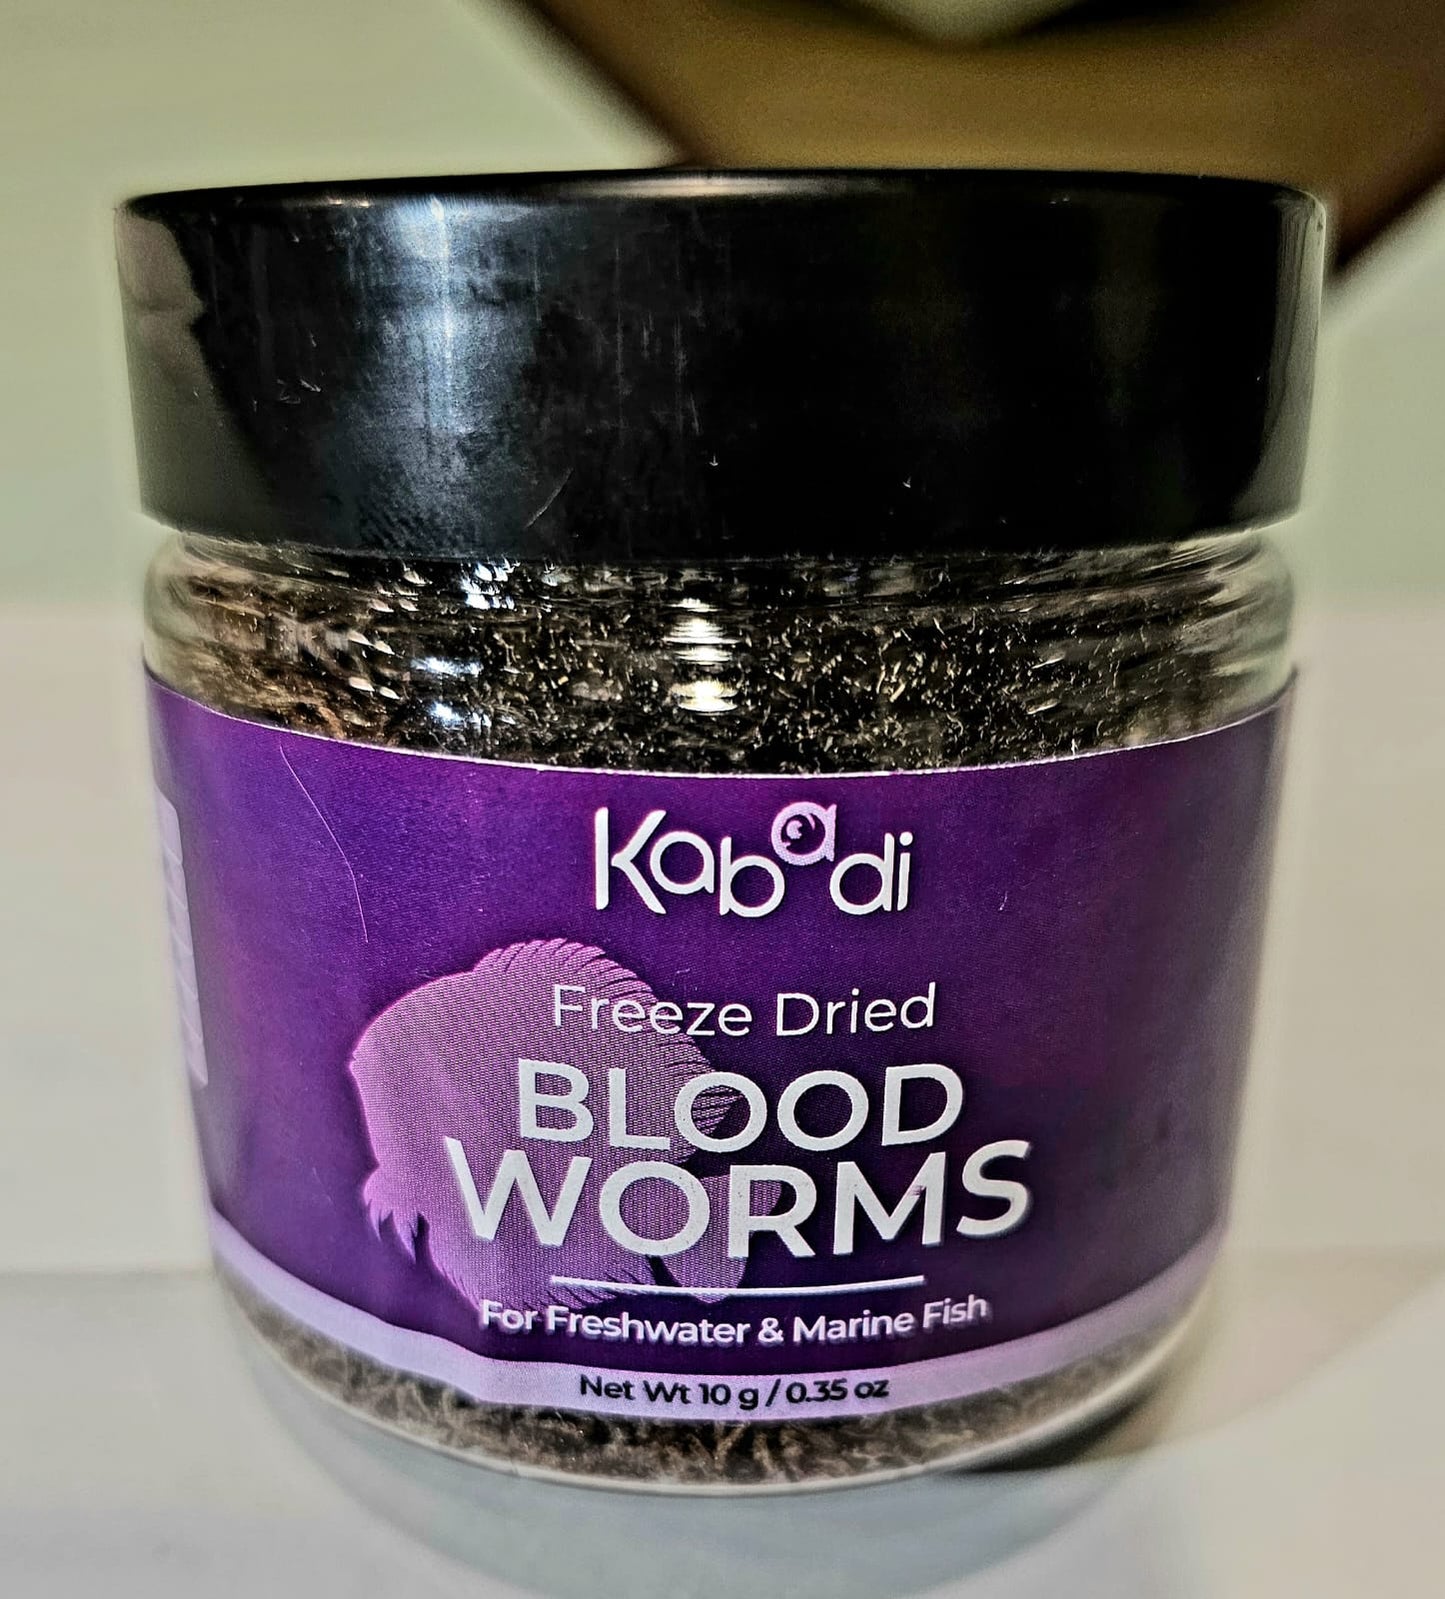 Kabadi freeze dried bloodworms